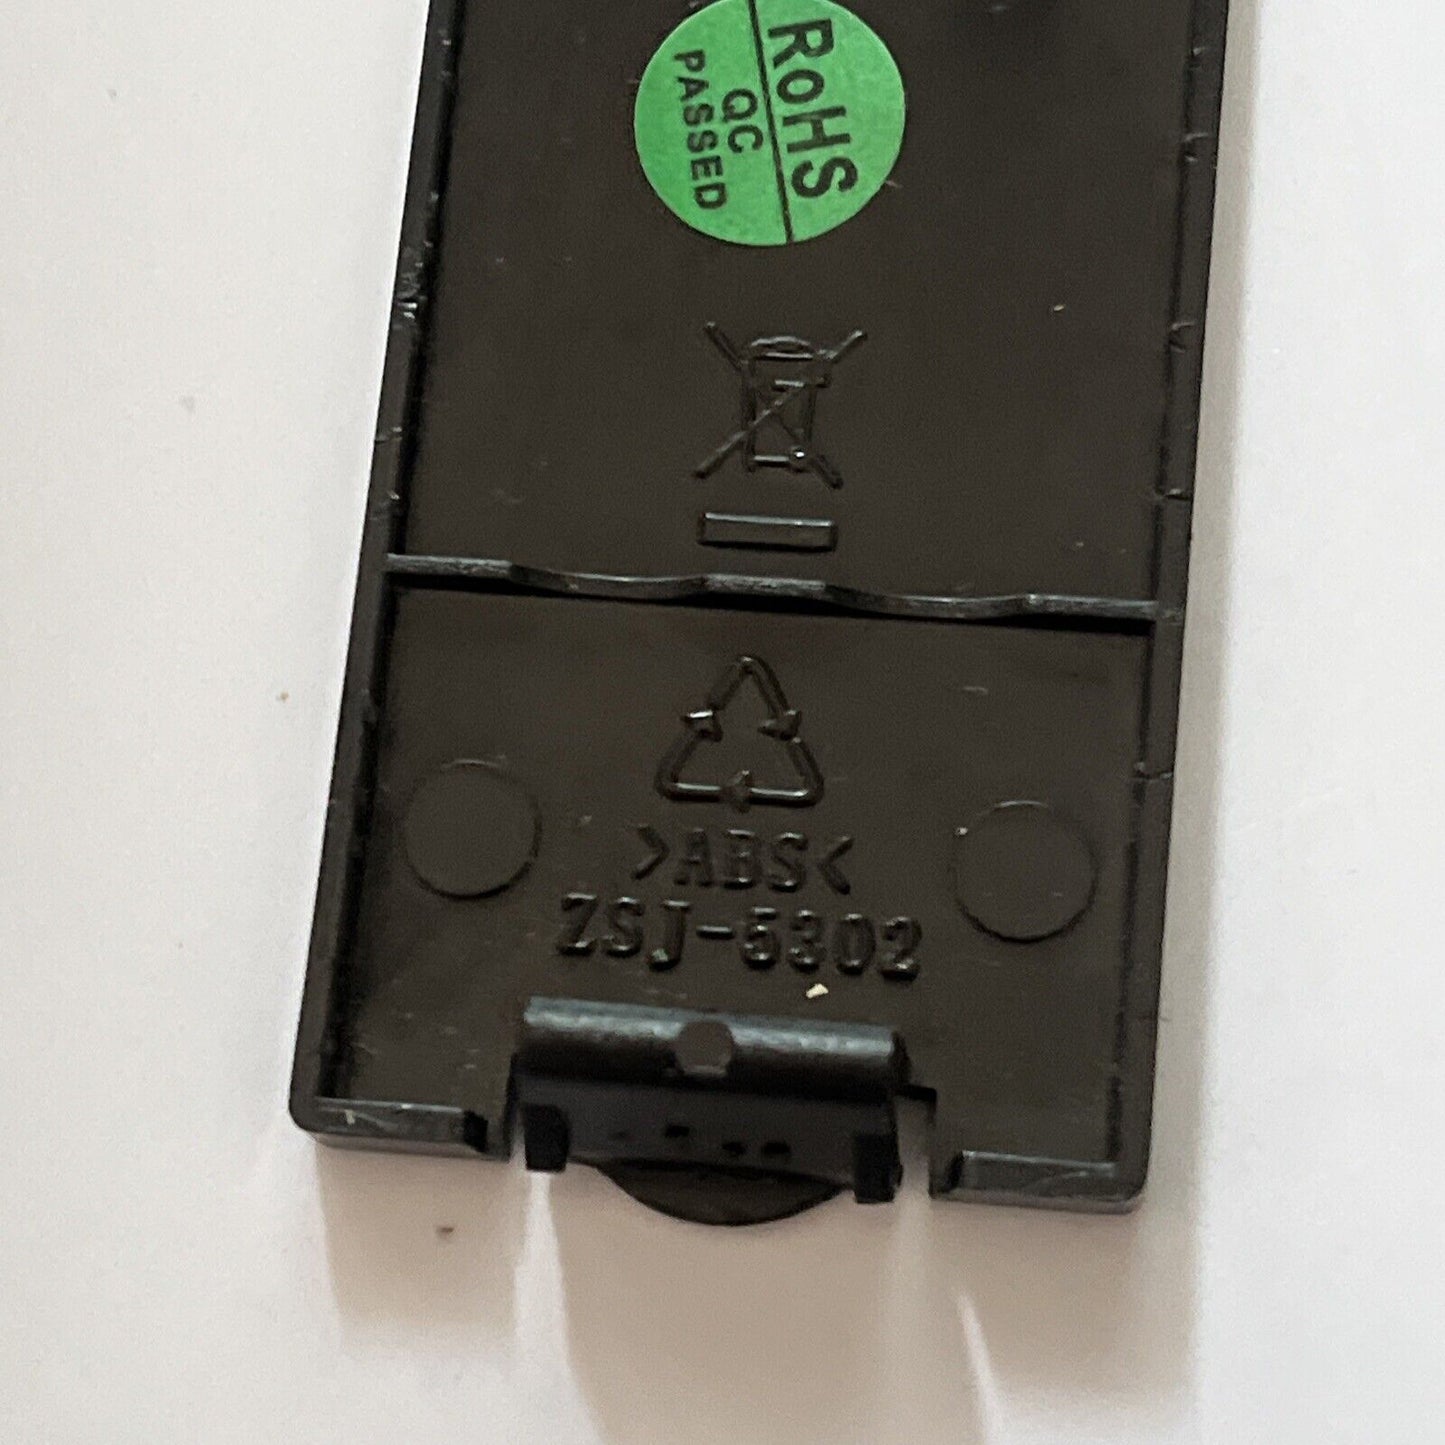 Genuine Audiosonic ZSJ-6302 Remote Control For DVD